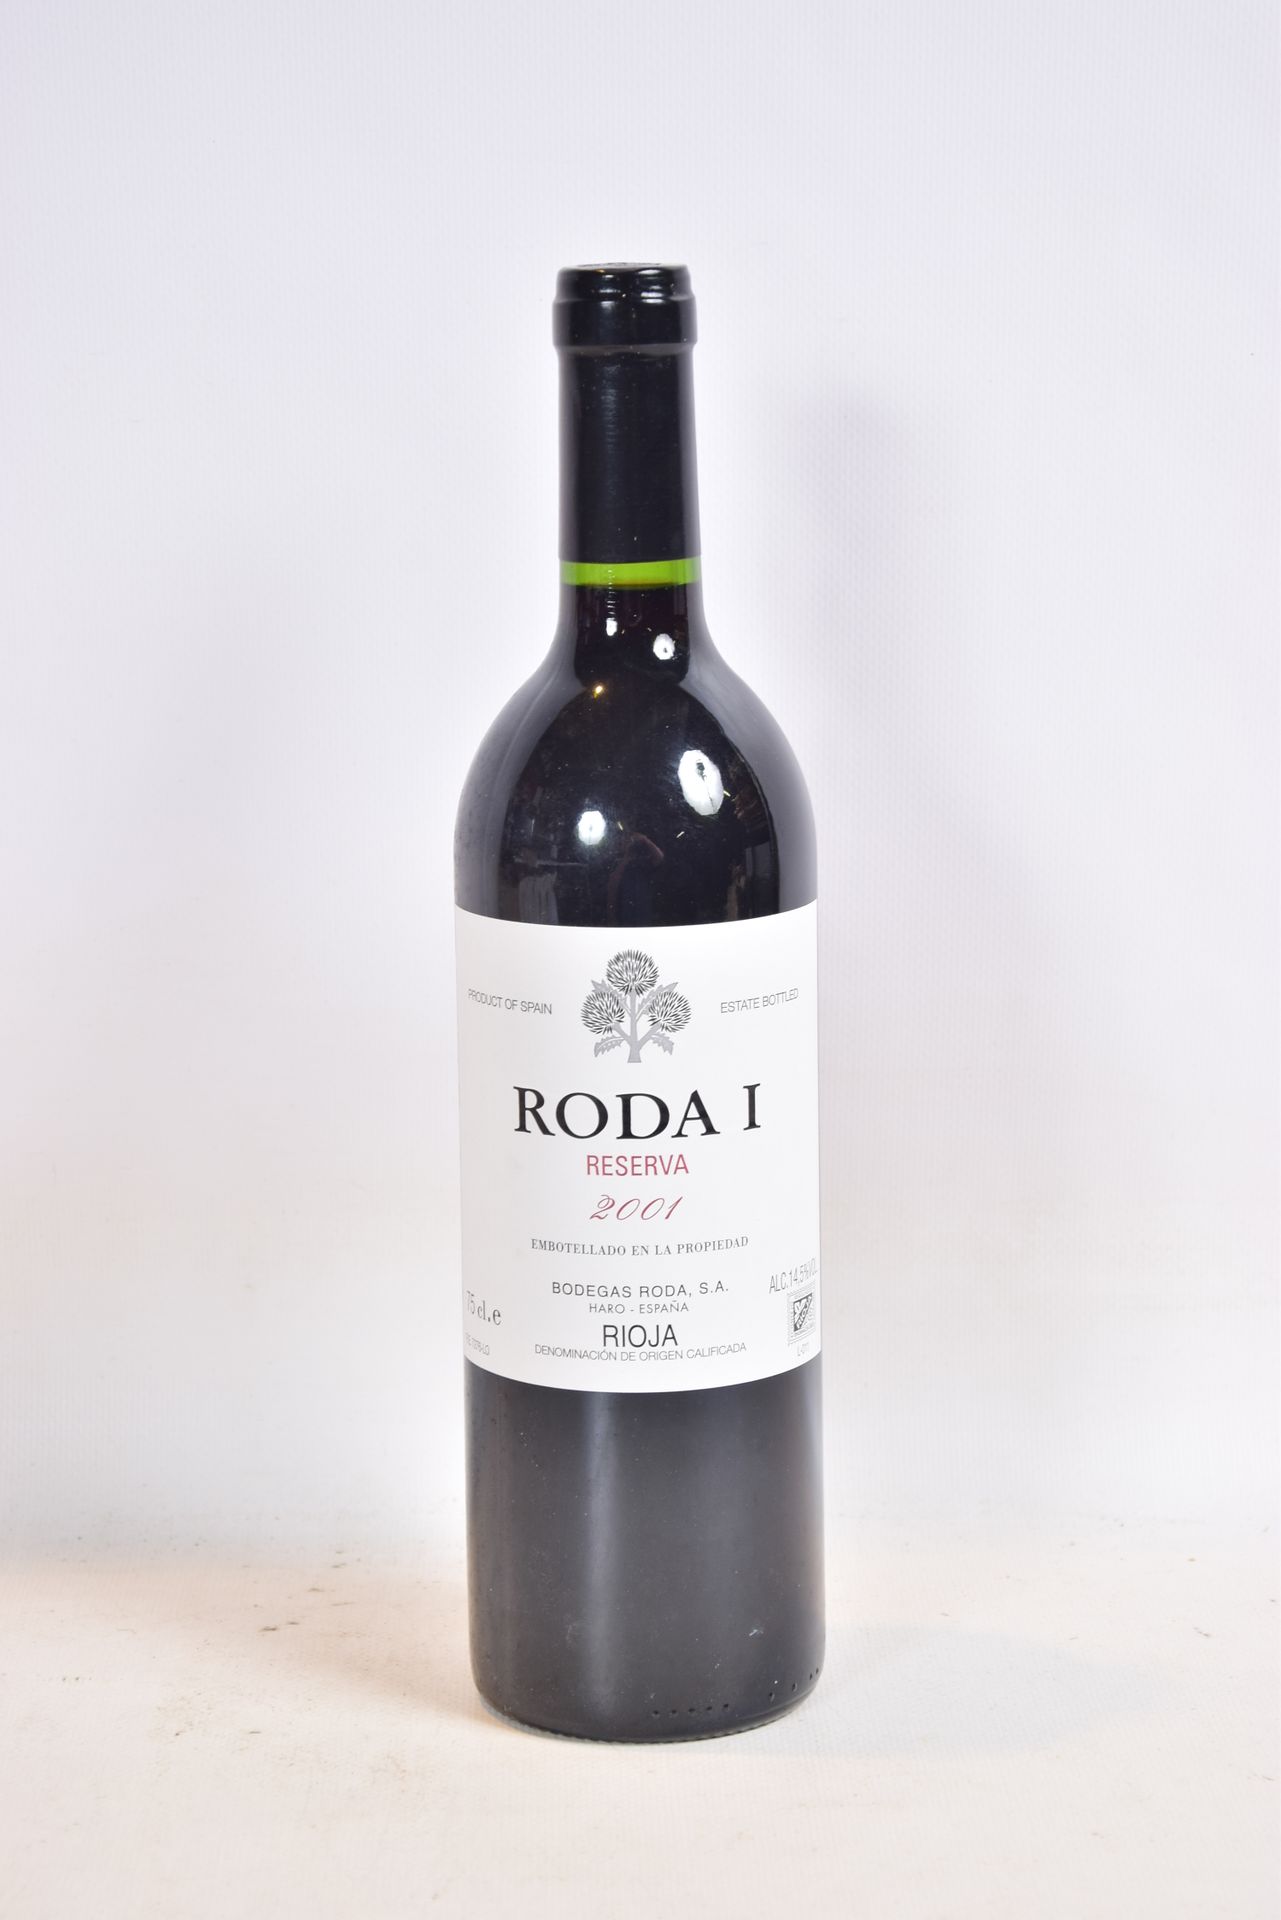 Null 1 Blle	Rioja RODA 1 Reserva mise Bodegas Roda (Espagne)		2001

	Présentatio&hellip;